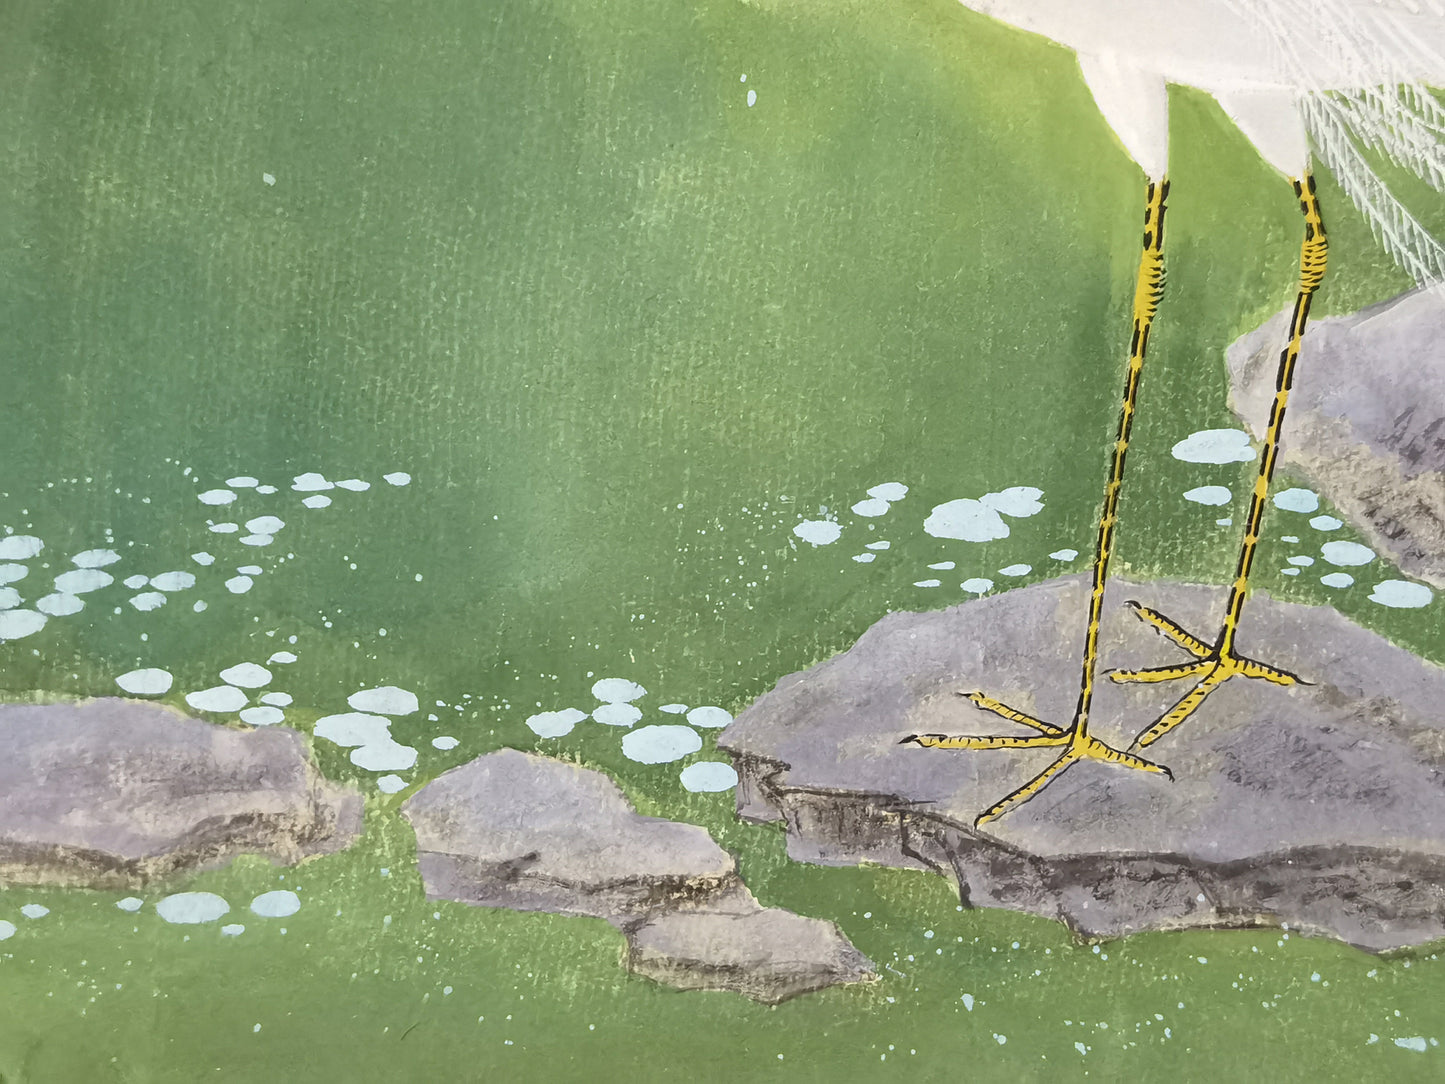 Egret Vividland Handmade Art Printing Duckweed Pond with Wood Frame